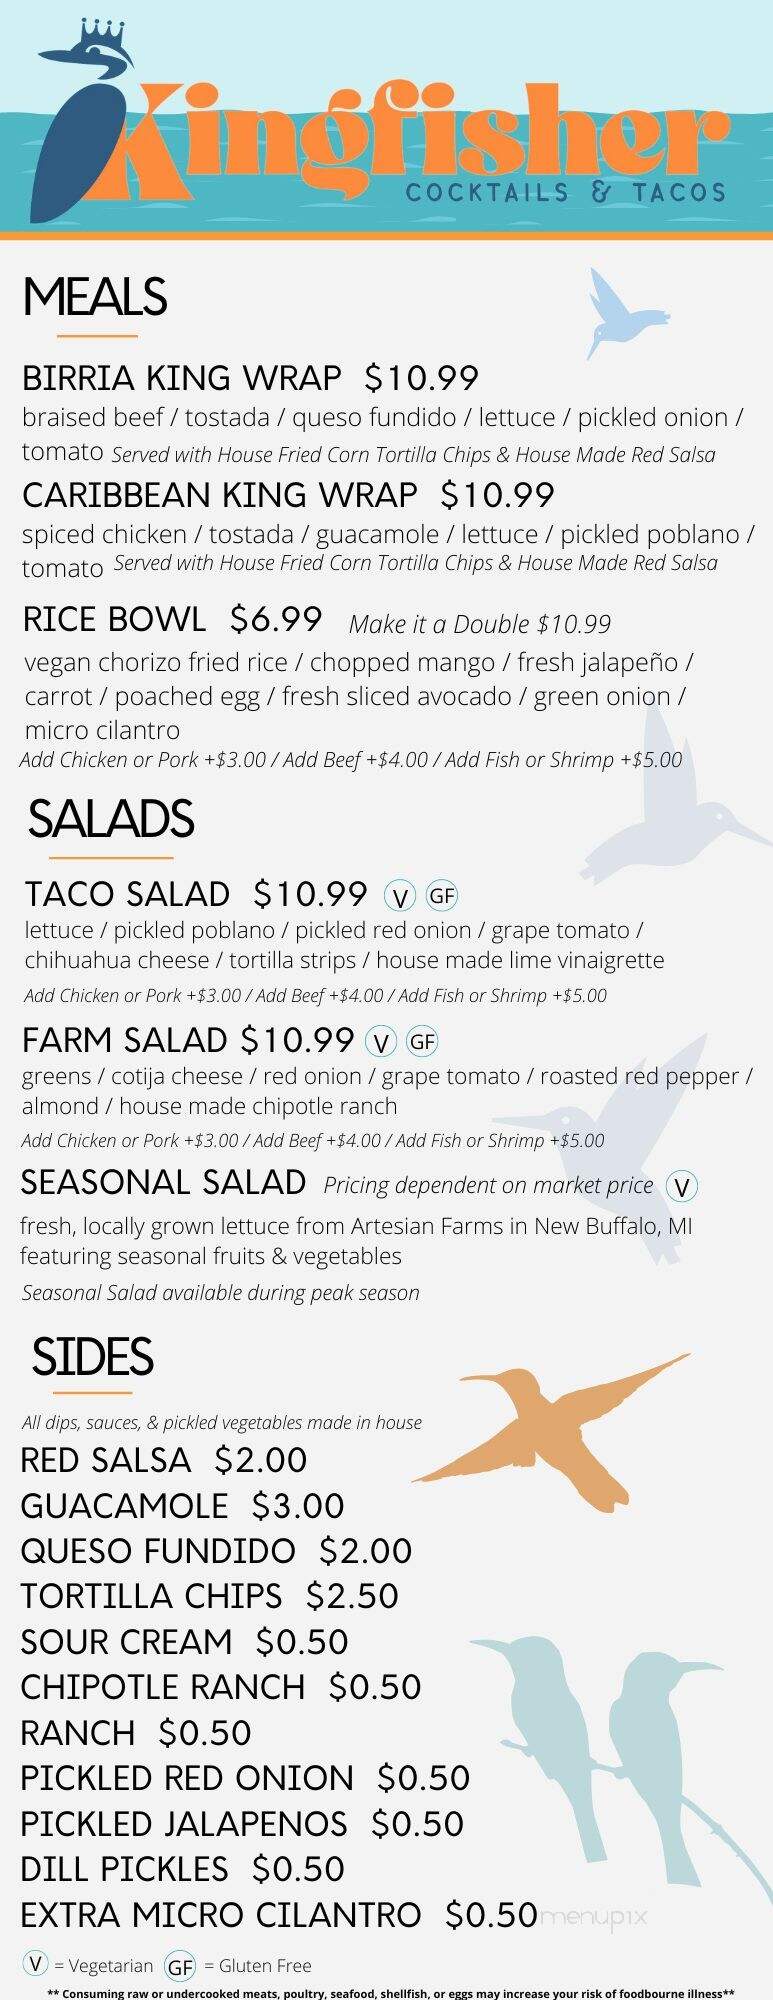 Kingfisher Cocktails & Tacos - St. Joseph, MI